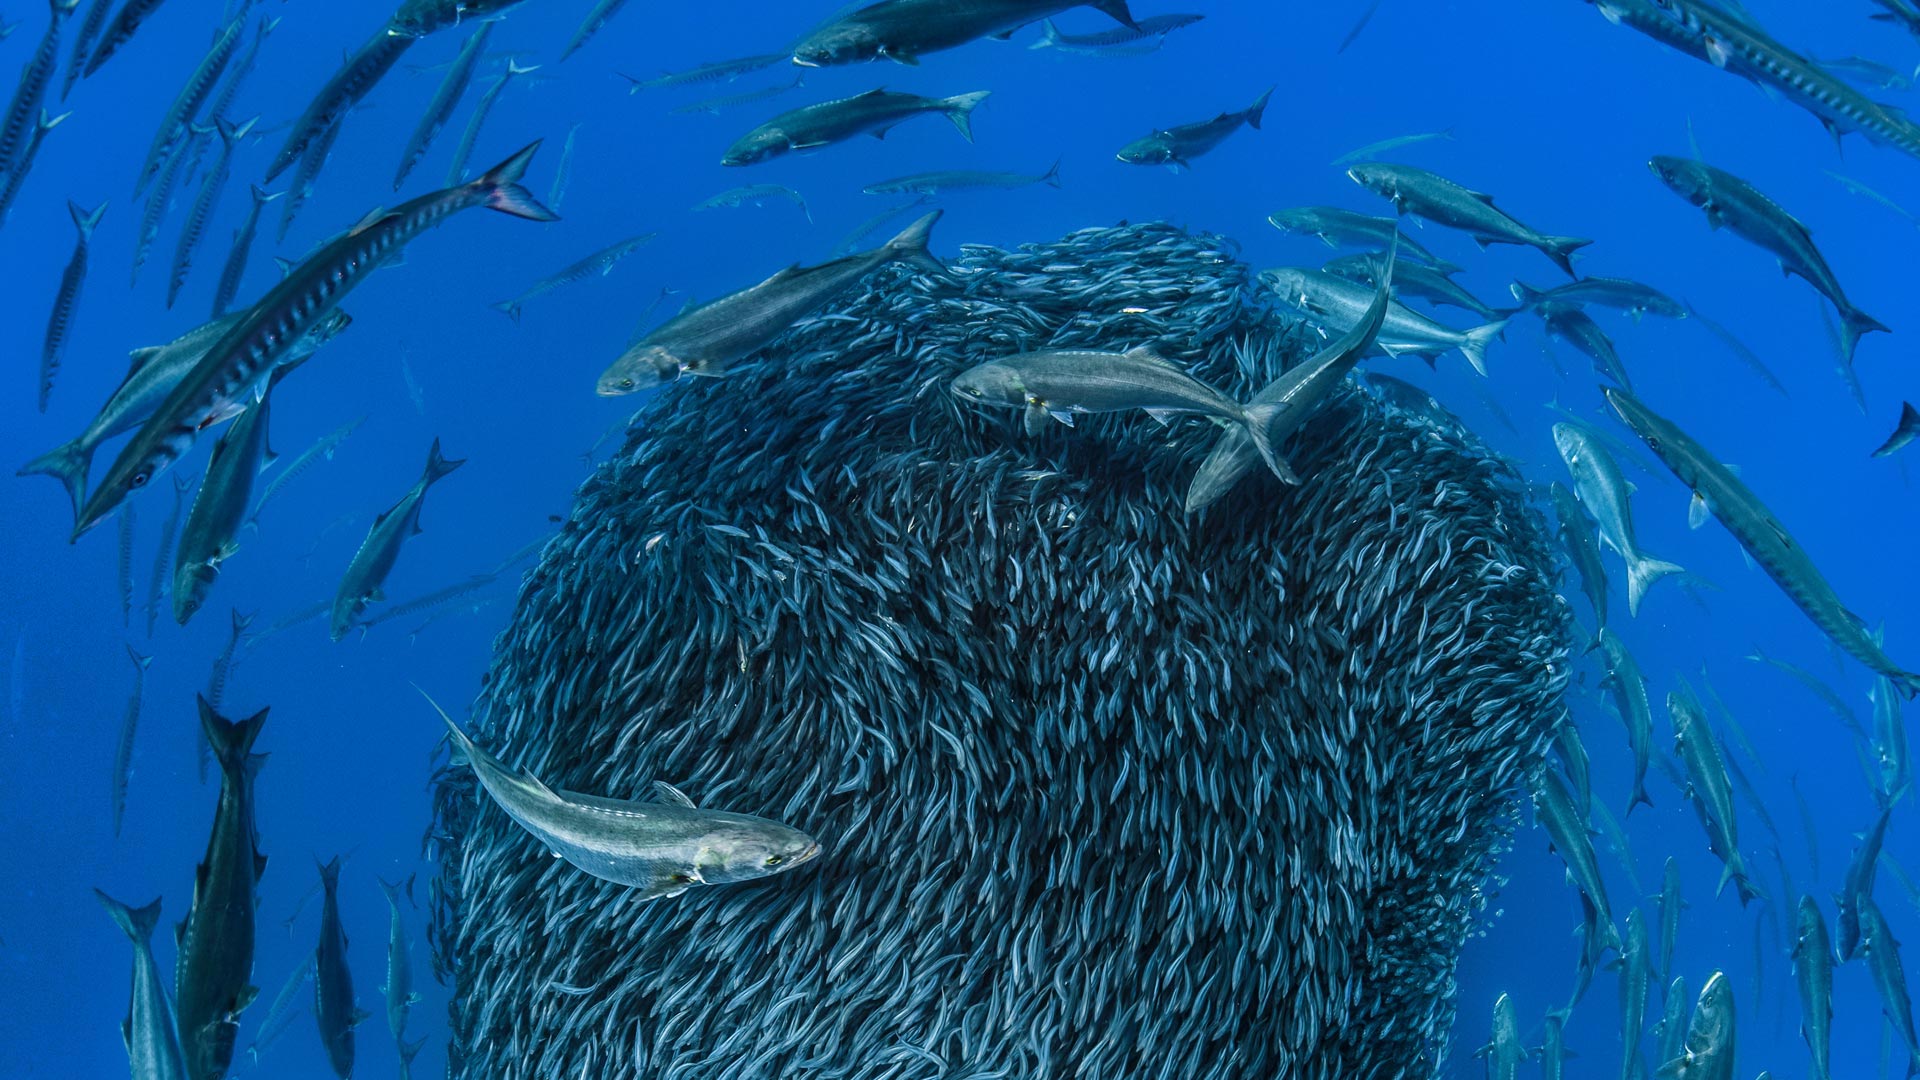 Mackerel forming a bait ball to avoid predators